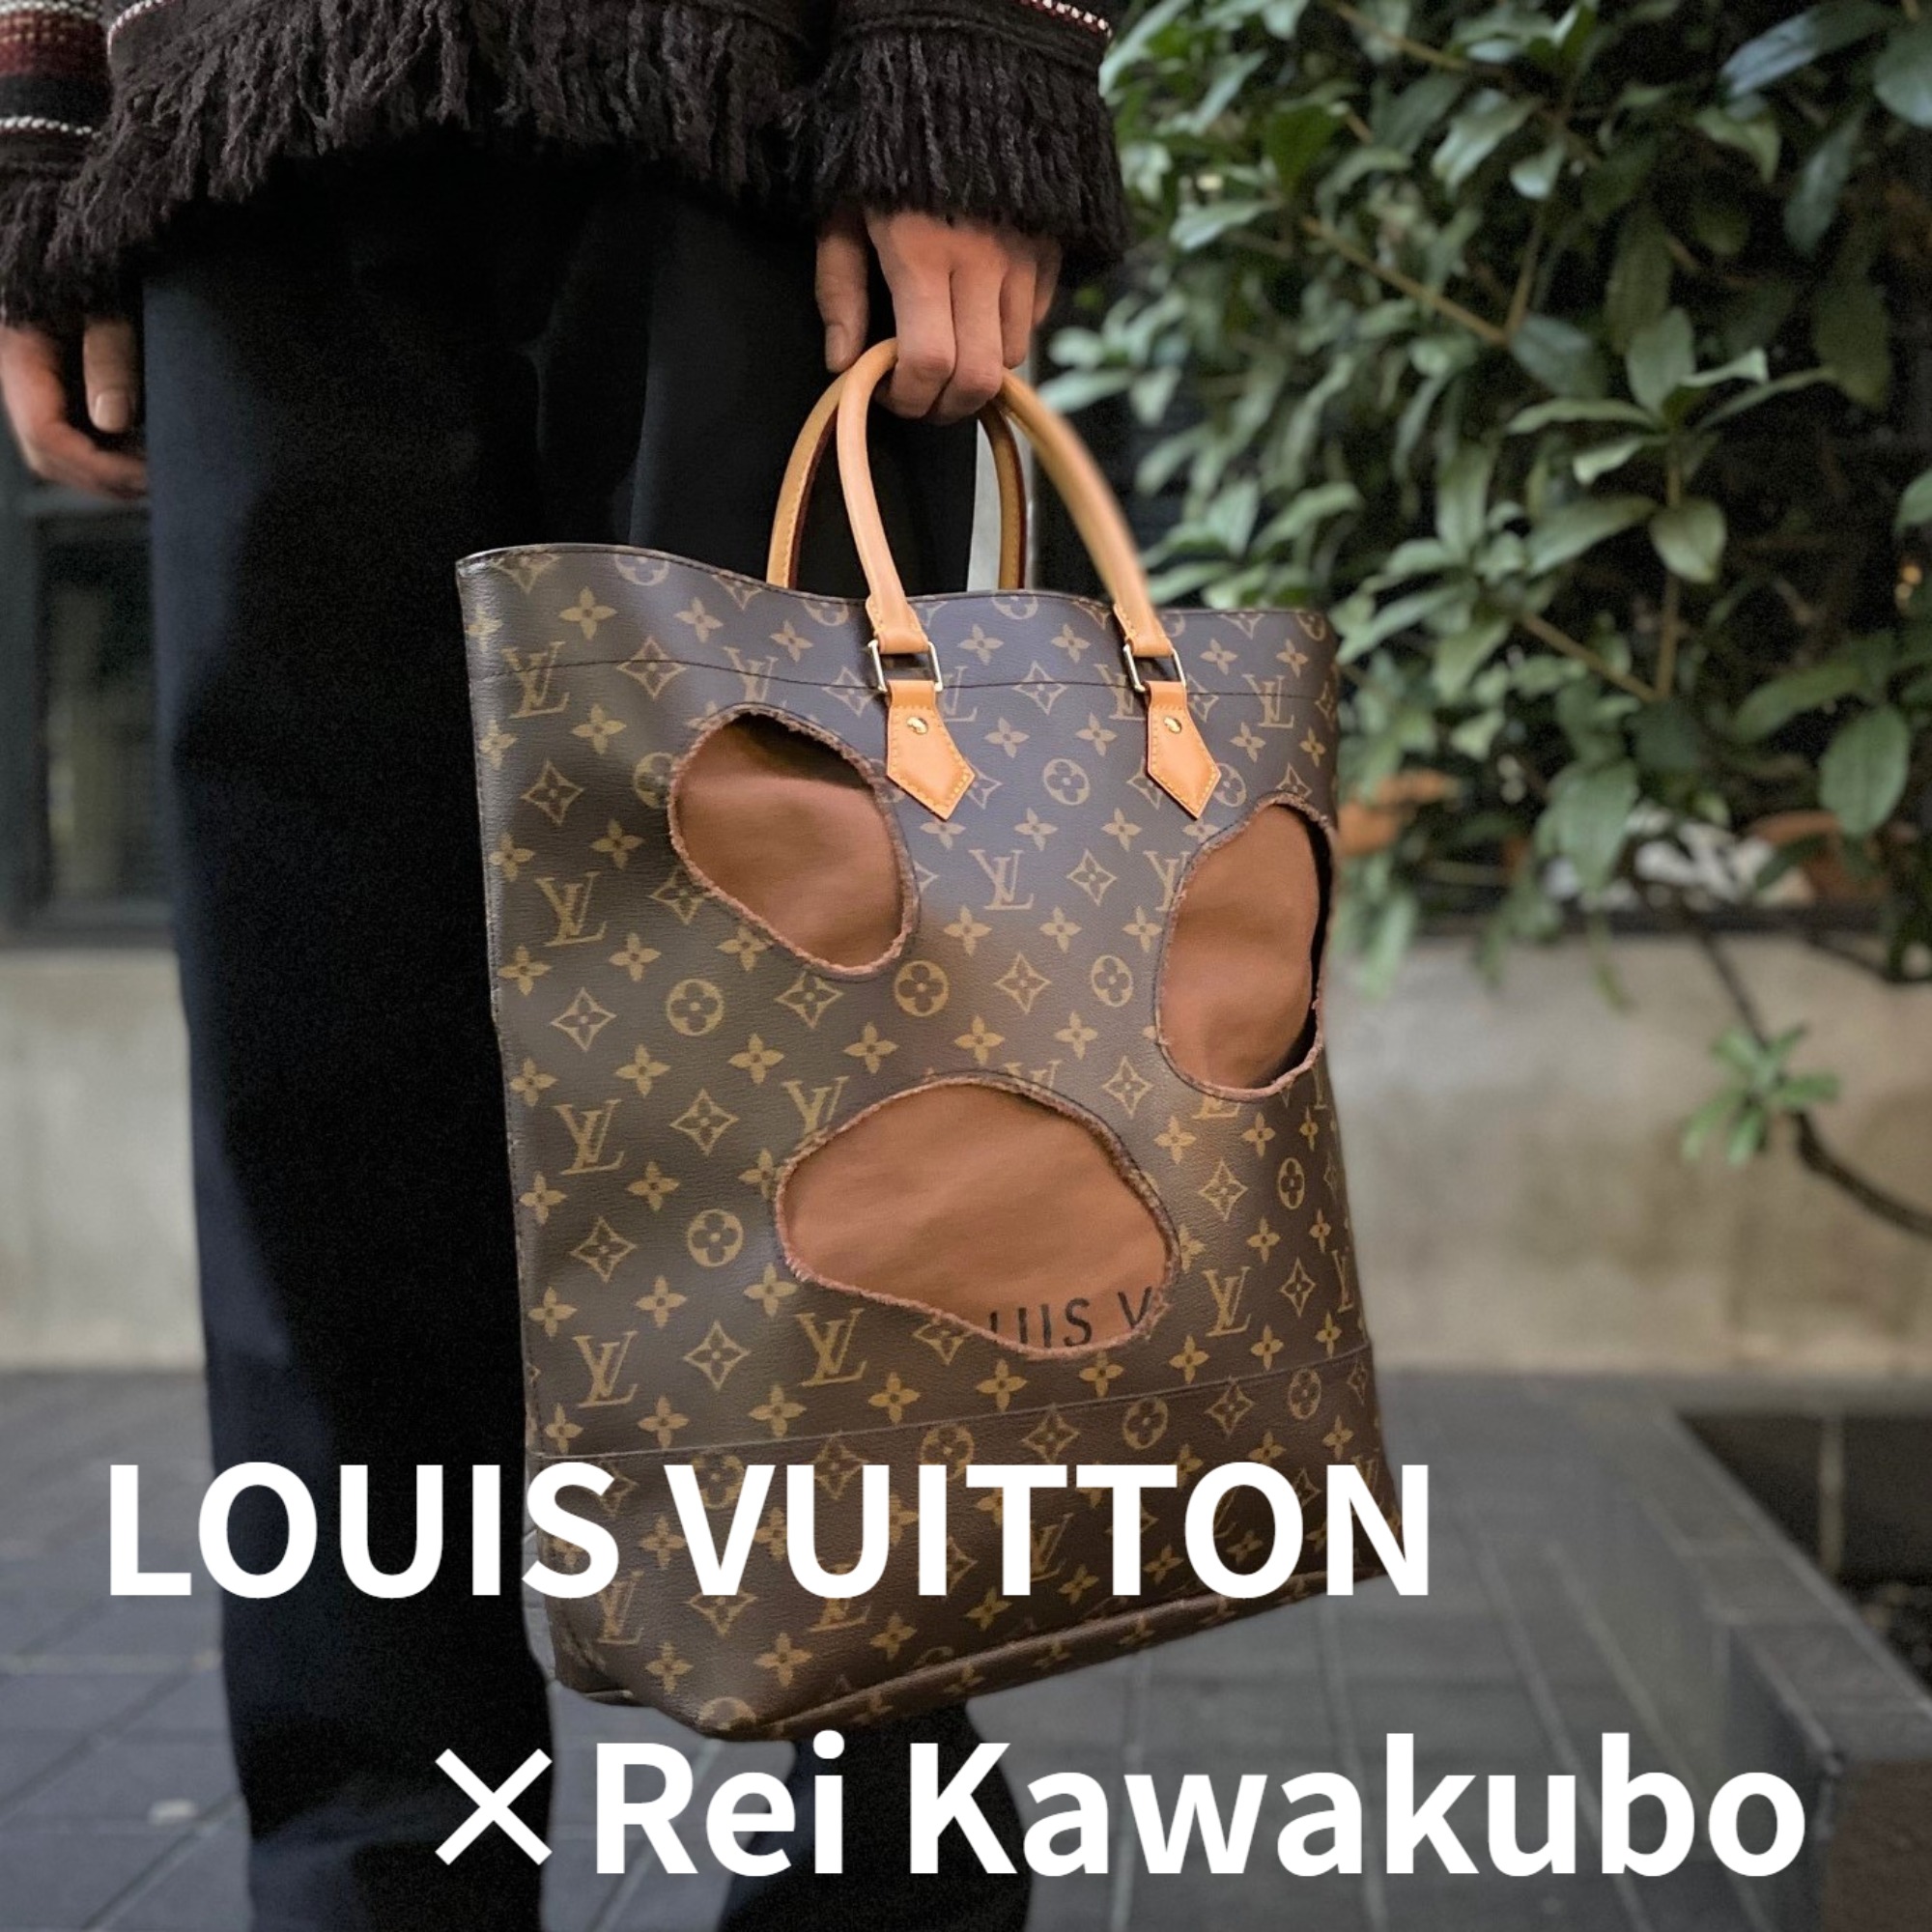 Louis Vuitton Rei Kawakubo Bag